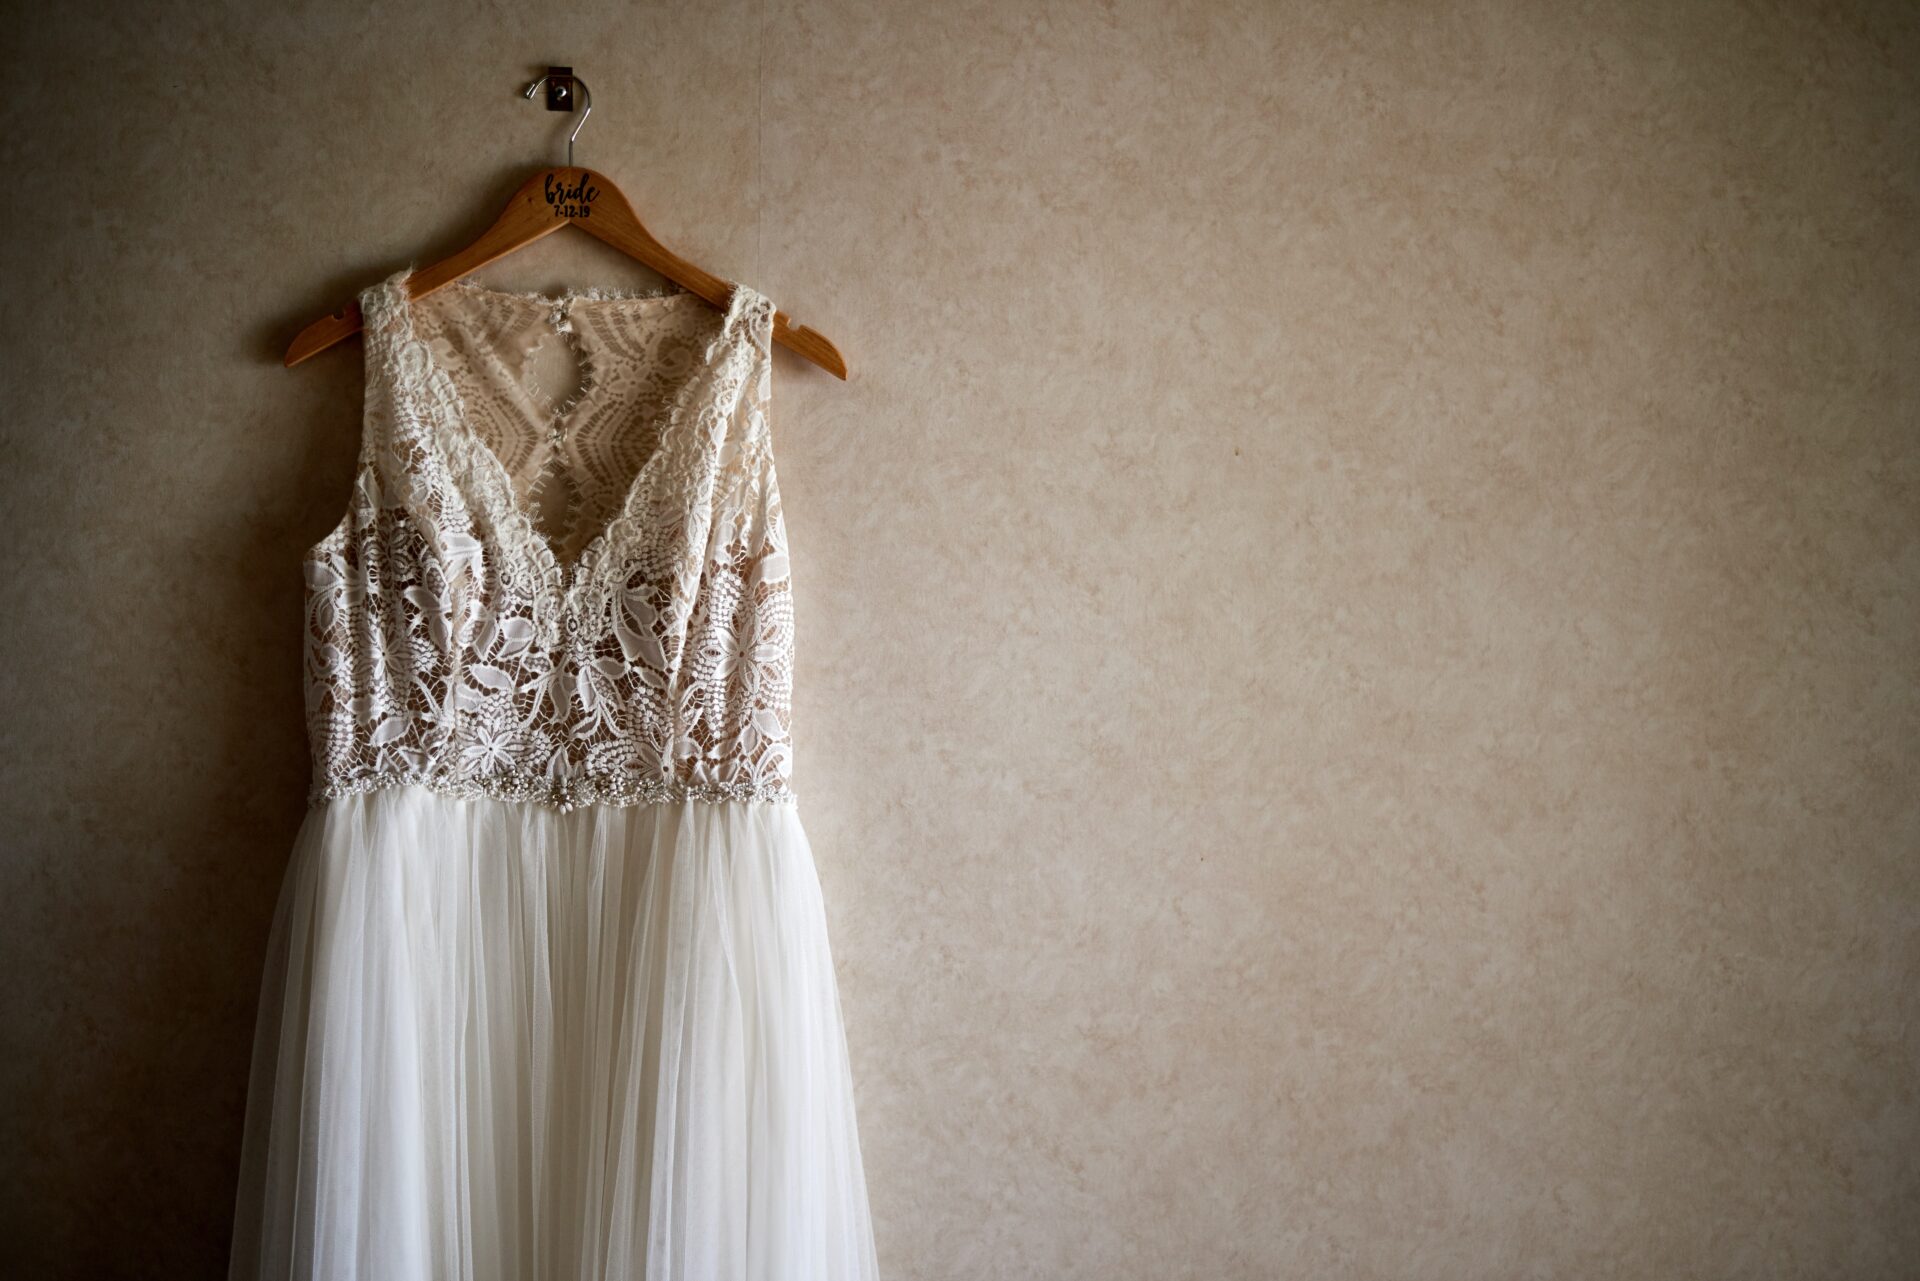 a sleeveless bridal dress on a hanger